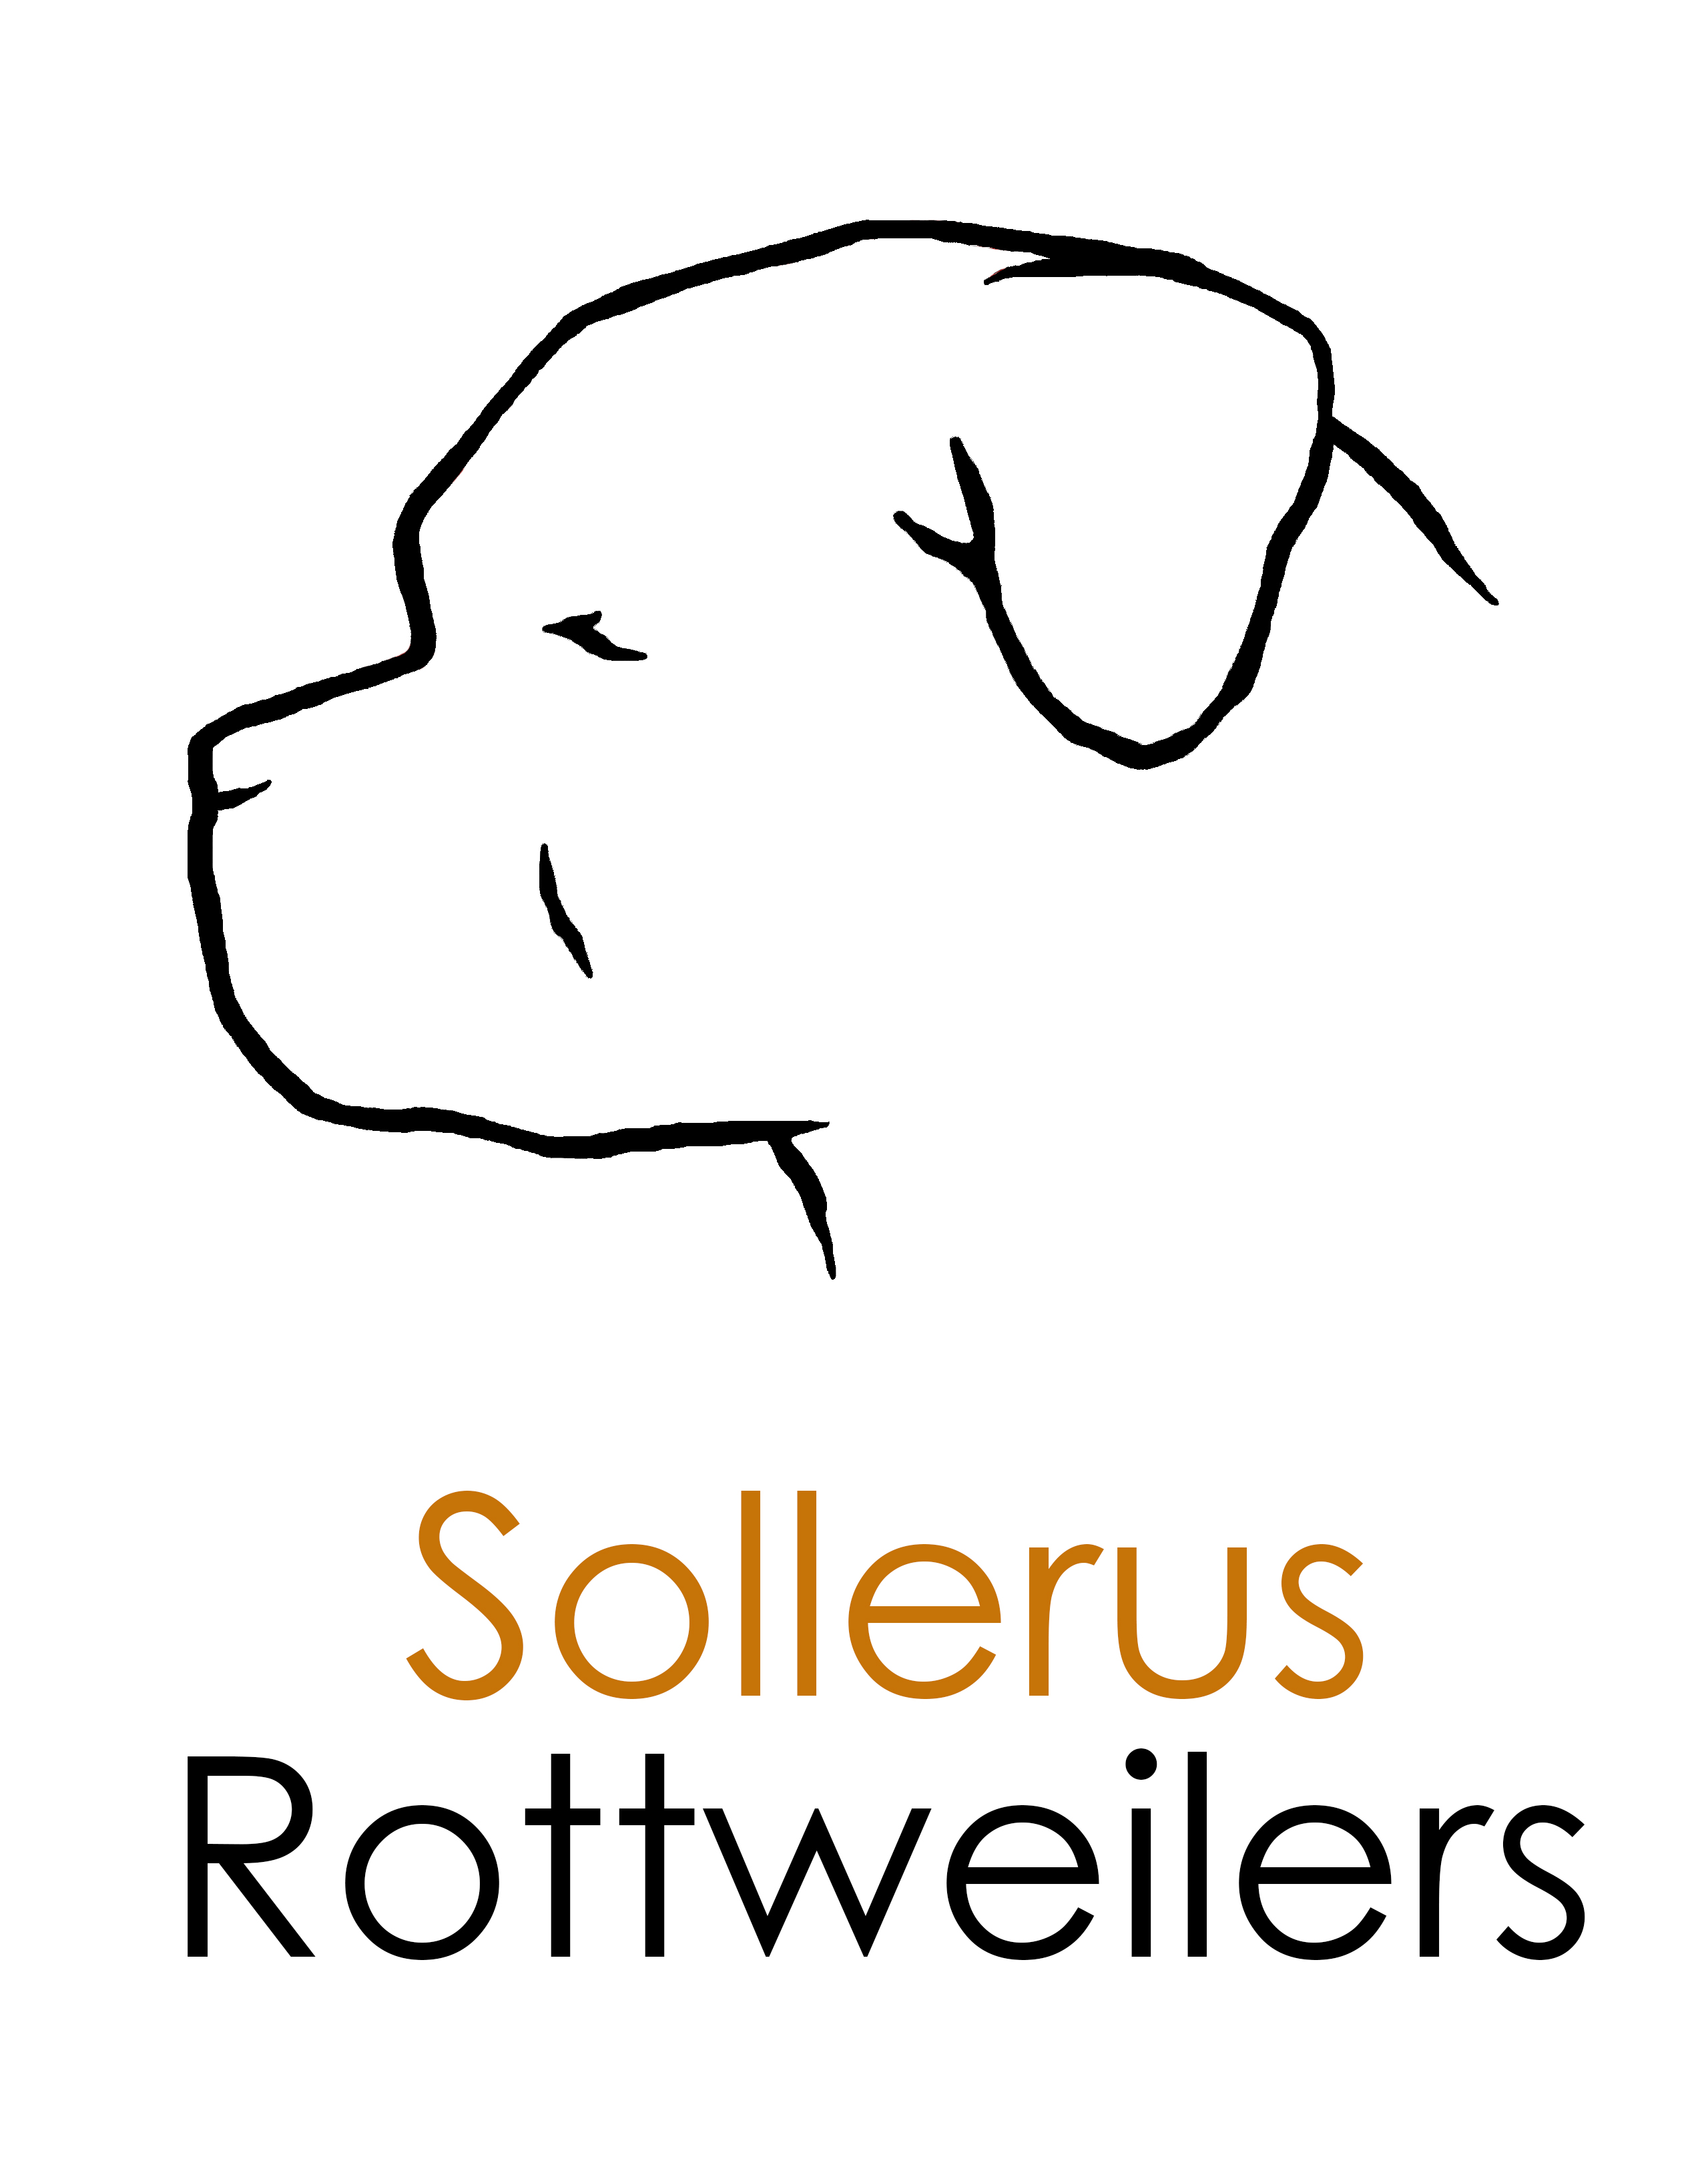 www.sollerus.com, Sollerus Rottweilers, Rottweiler Breeder, Rottweiler Adelaide, Rottweiler South Australia